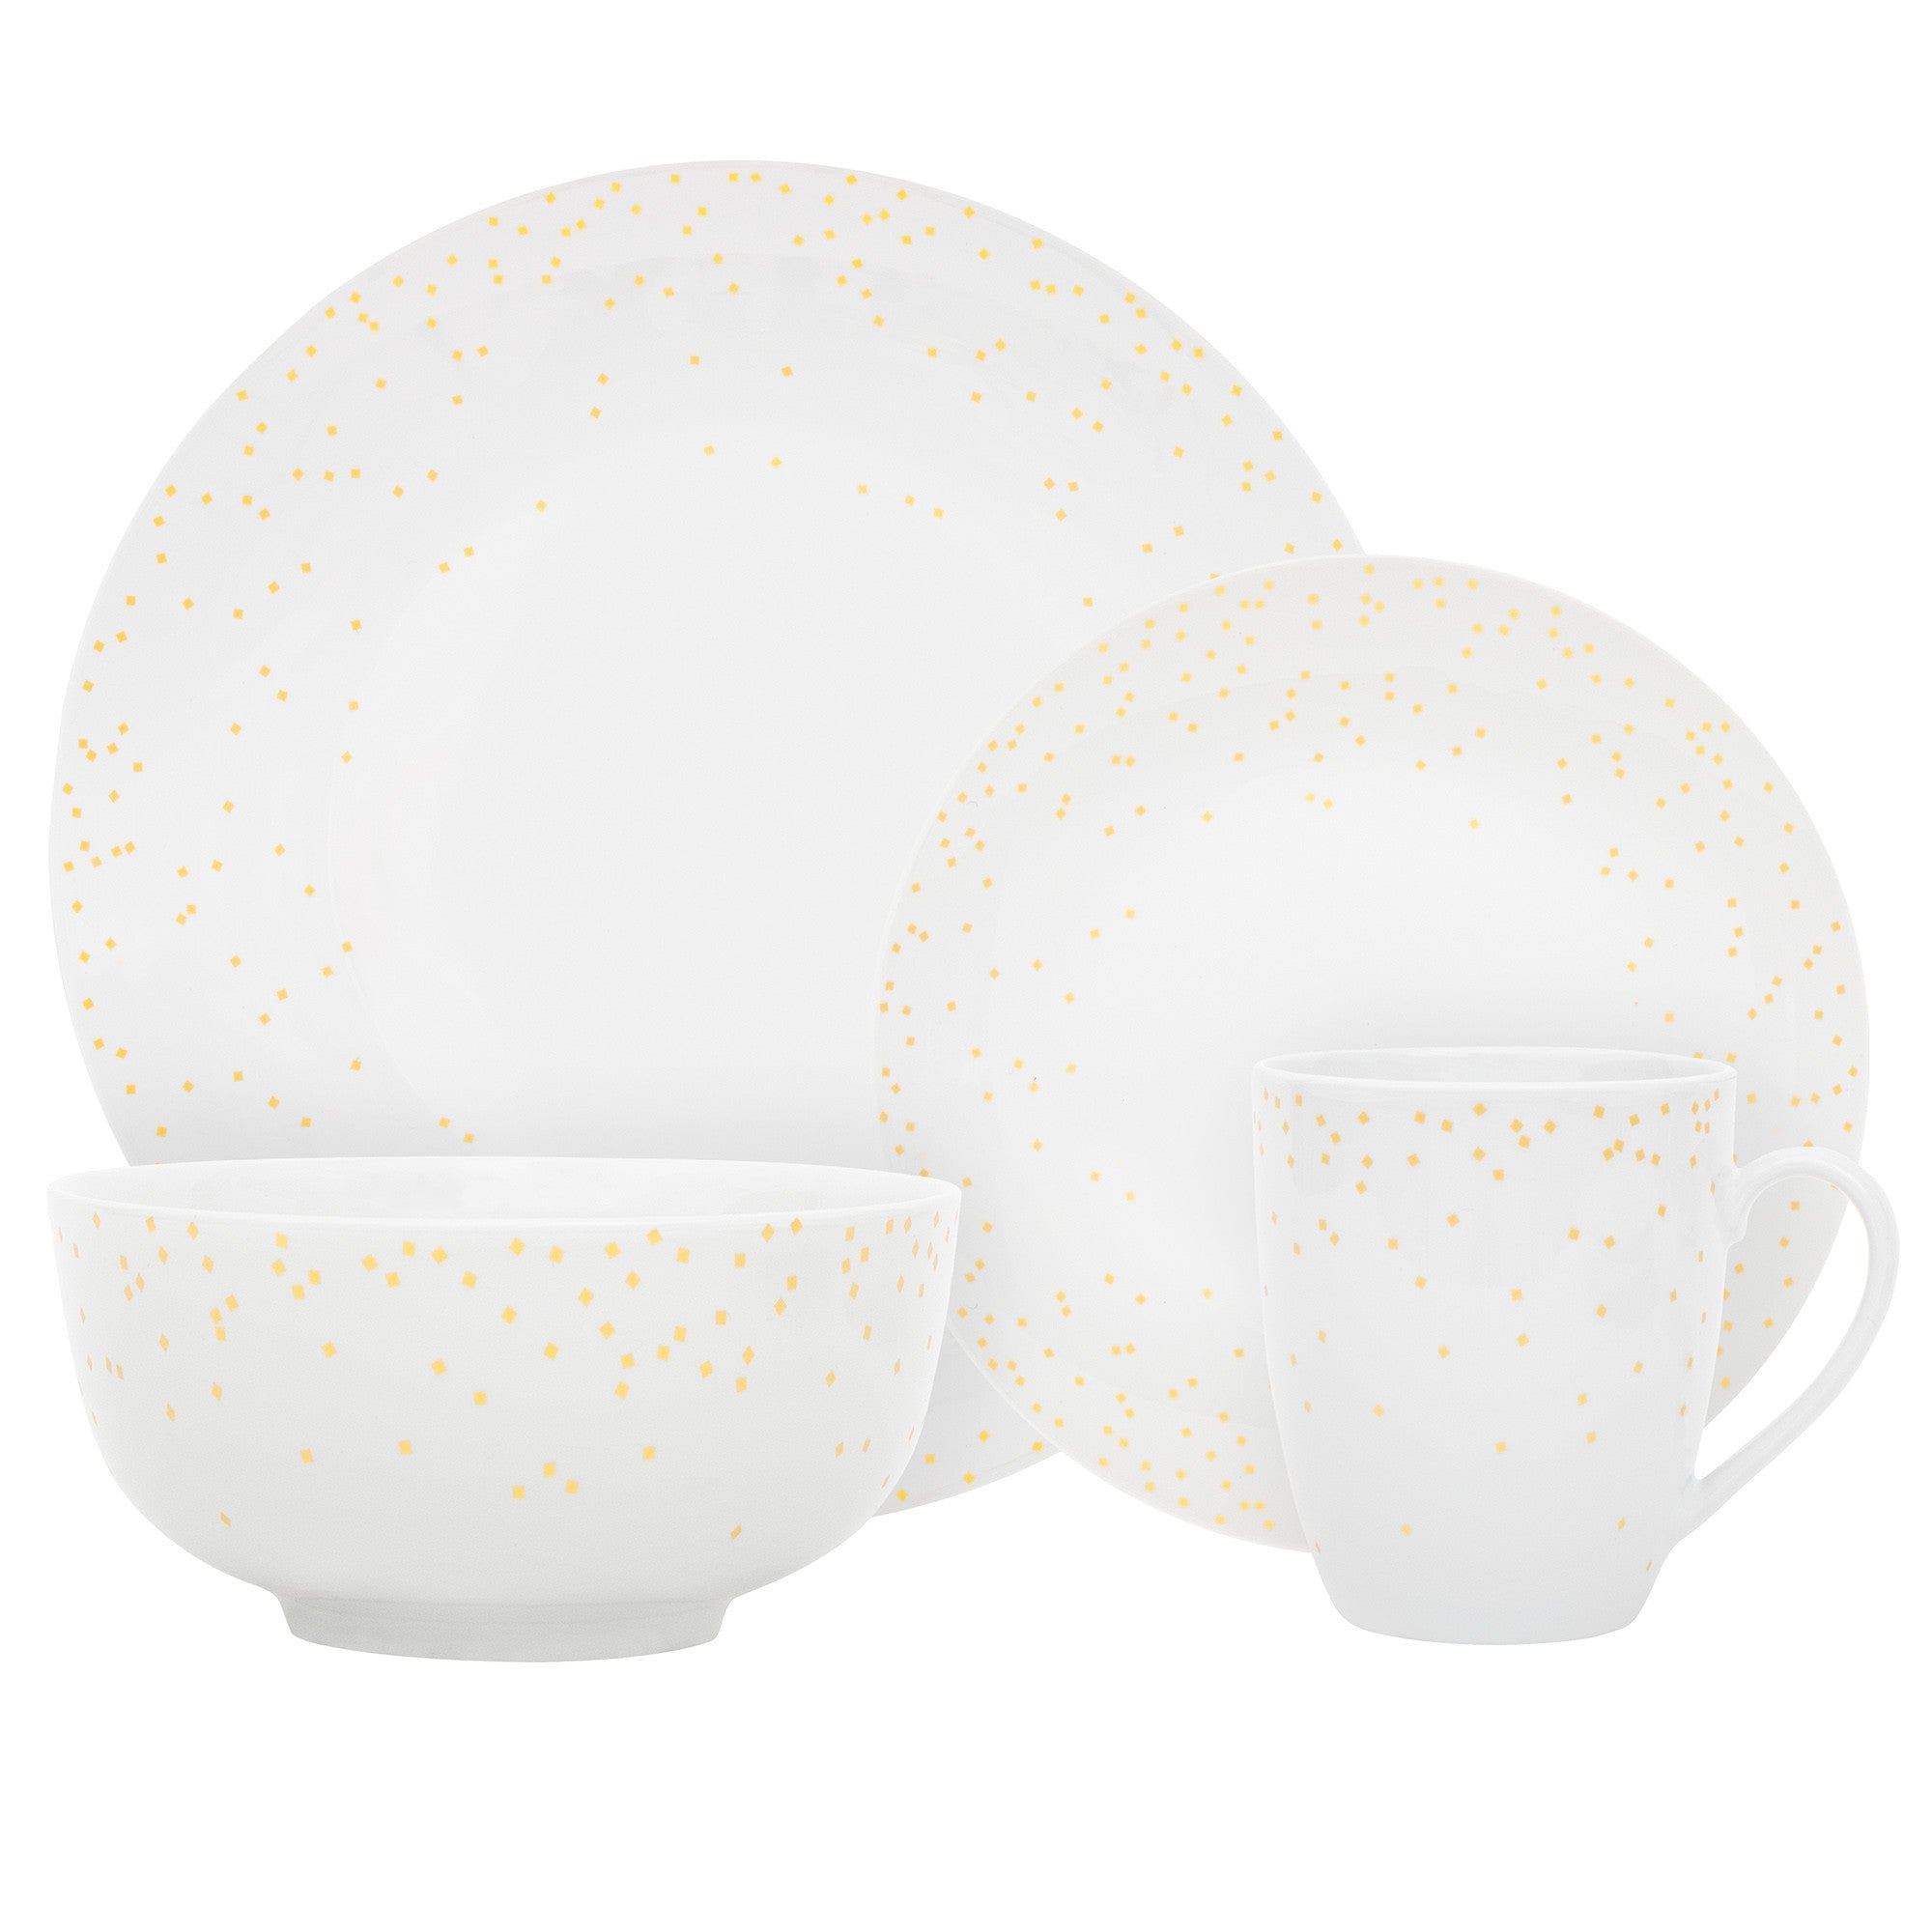 title:Safdie & Co. Luxury Premium Porcelain Dinnerset 16 Piece Set Coupe Diamond Confetti;color:Multi